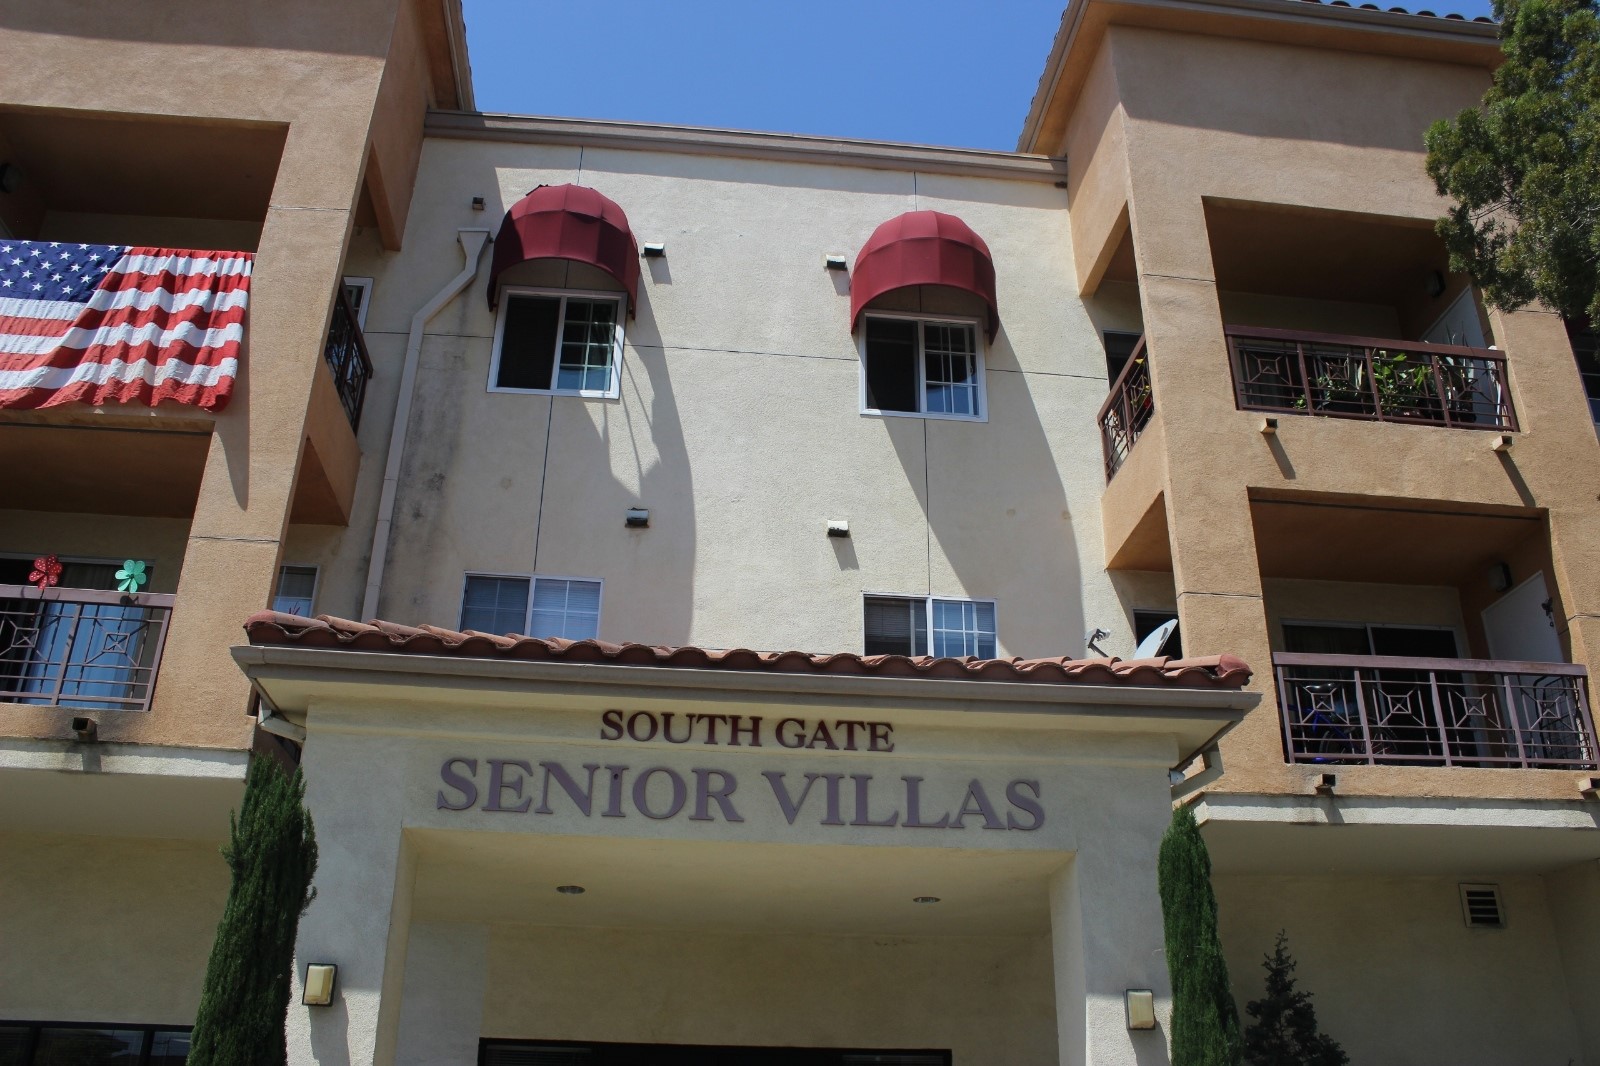 South Gate Senior Villas front entrance